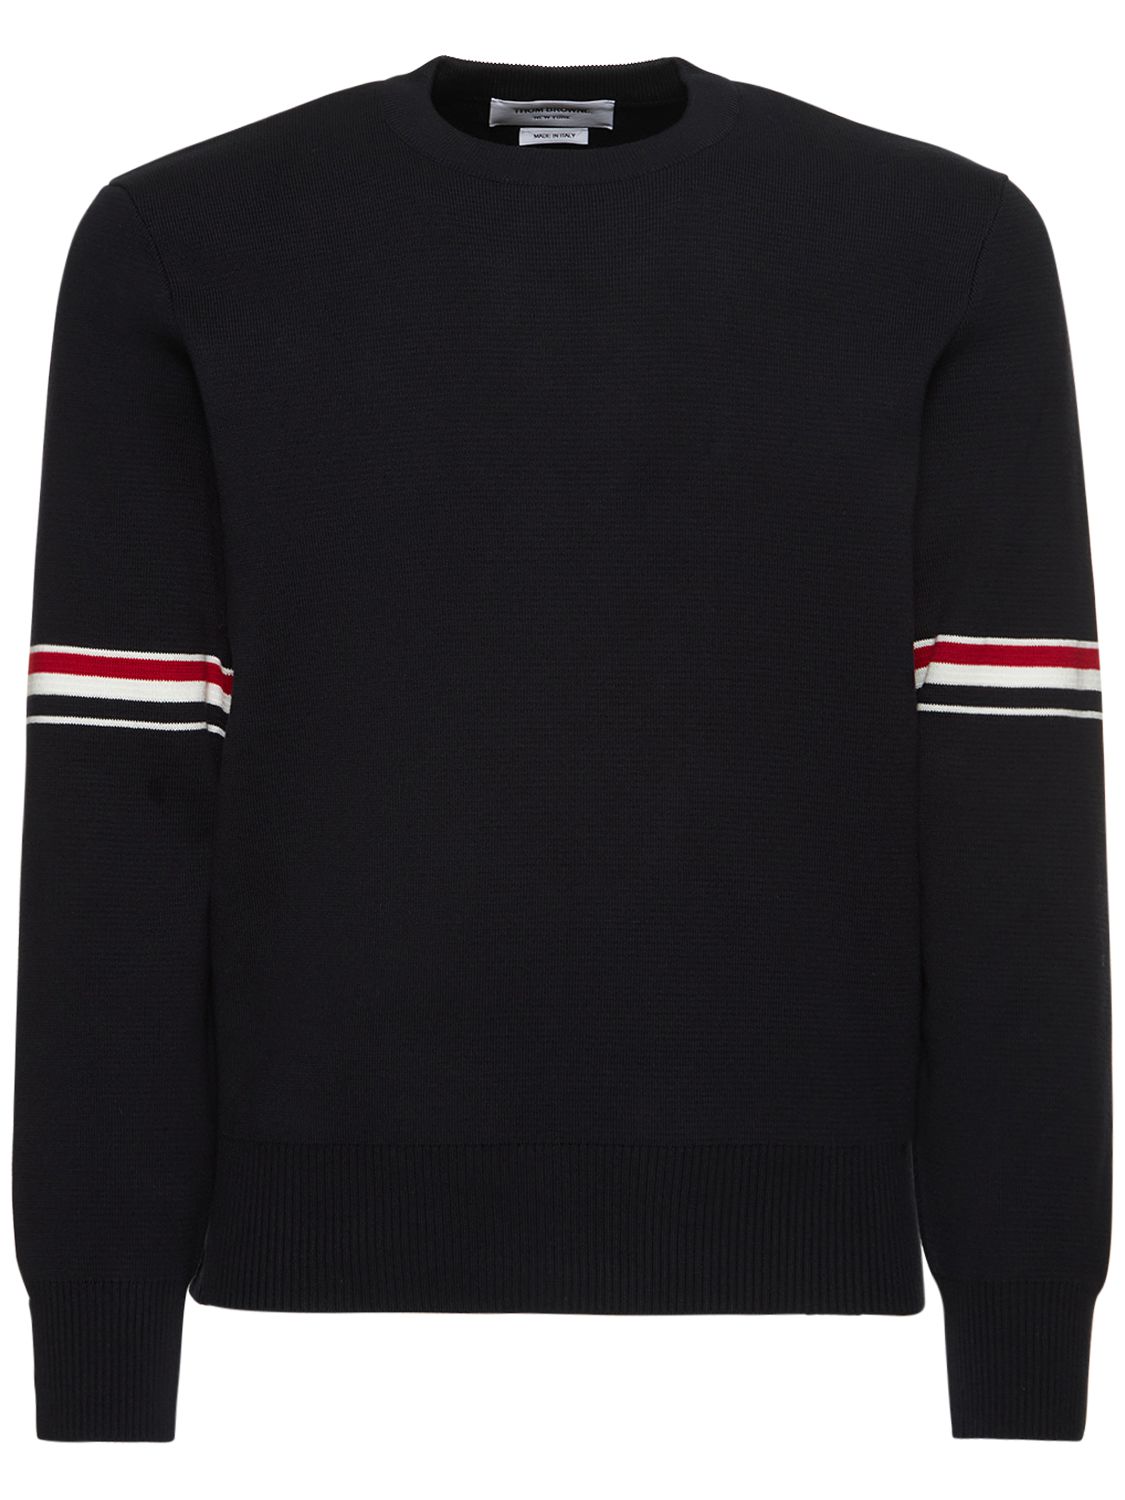 Milano Stitch Crewneck Cotton Sweater